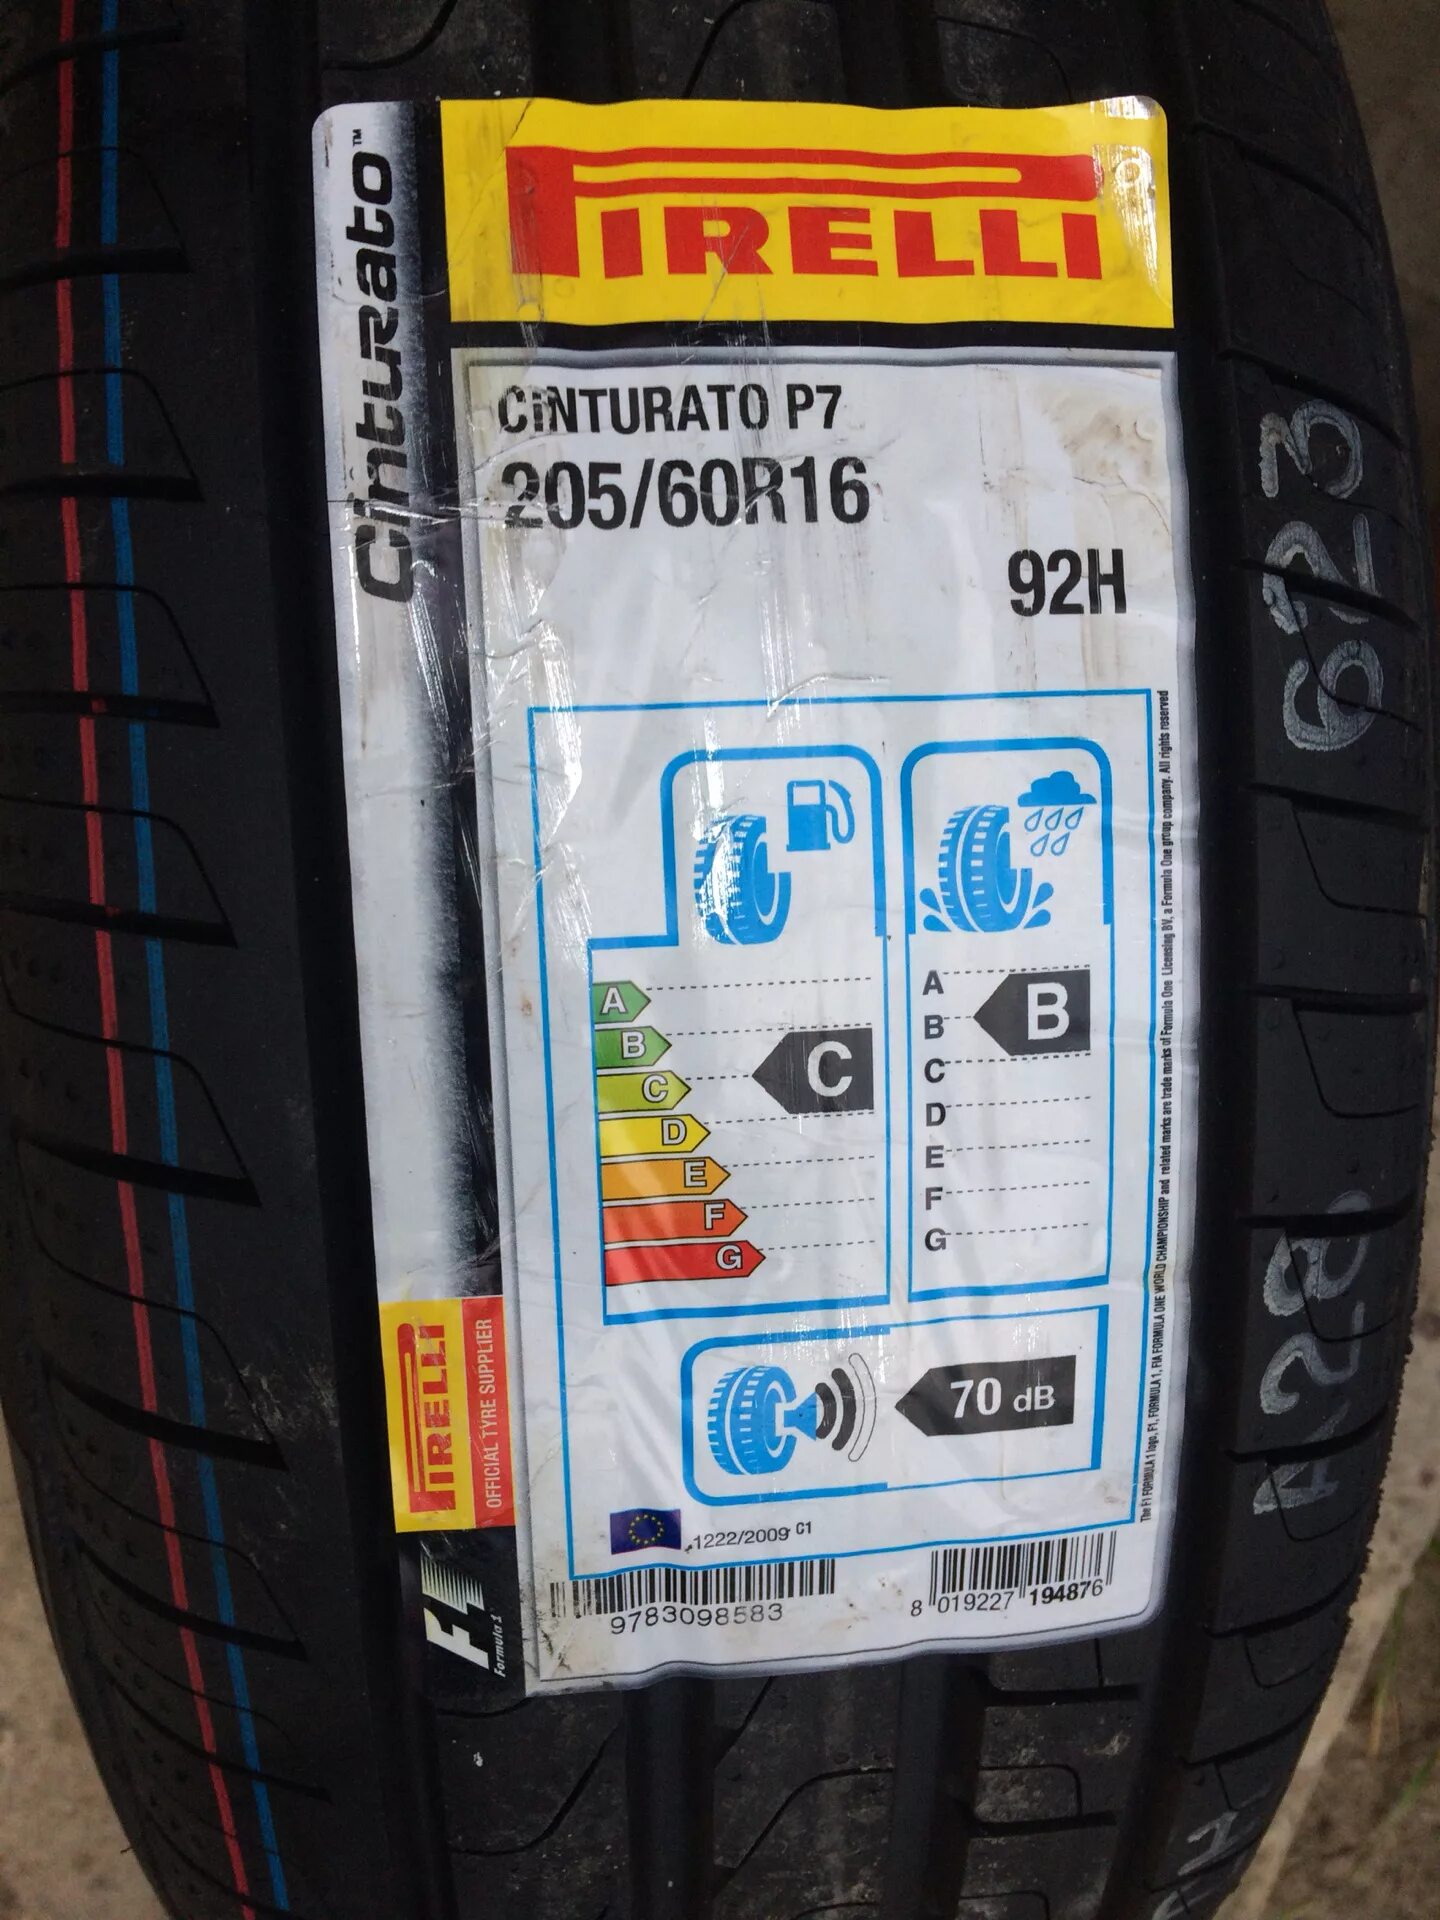 Pirelli p7 205/60 r16. 205/60/16 Pirelli Cinturato p7. Автошина 205/60-16 Pirelli Cinturato p7 92h. Шины Пирелли Цинтурато р7 205/60 r16.